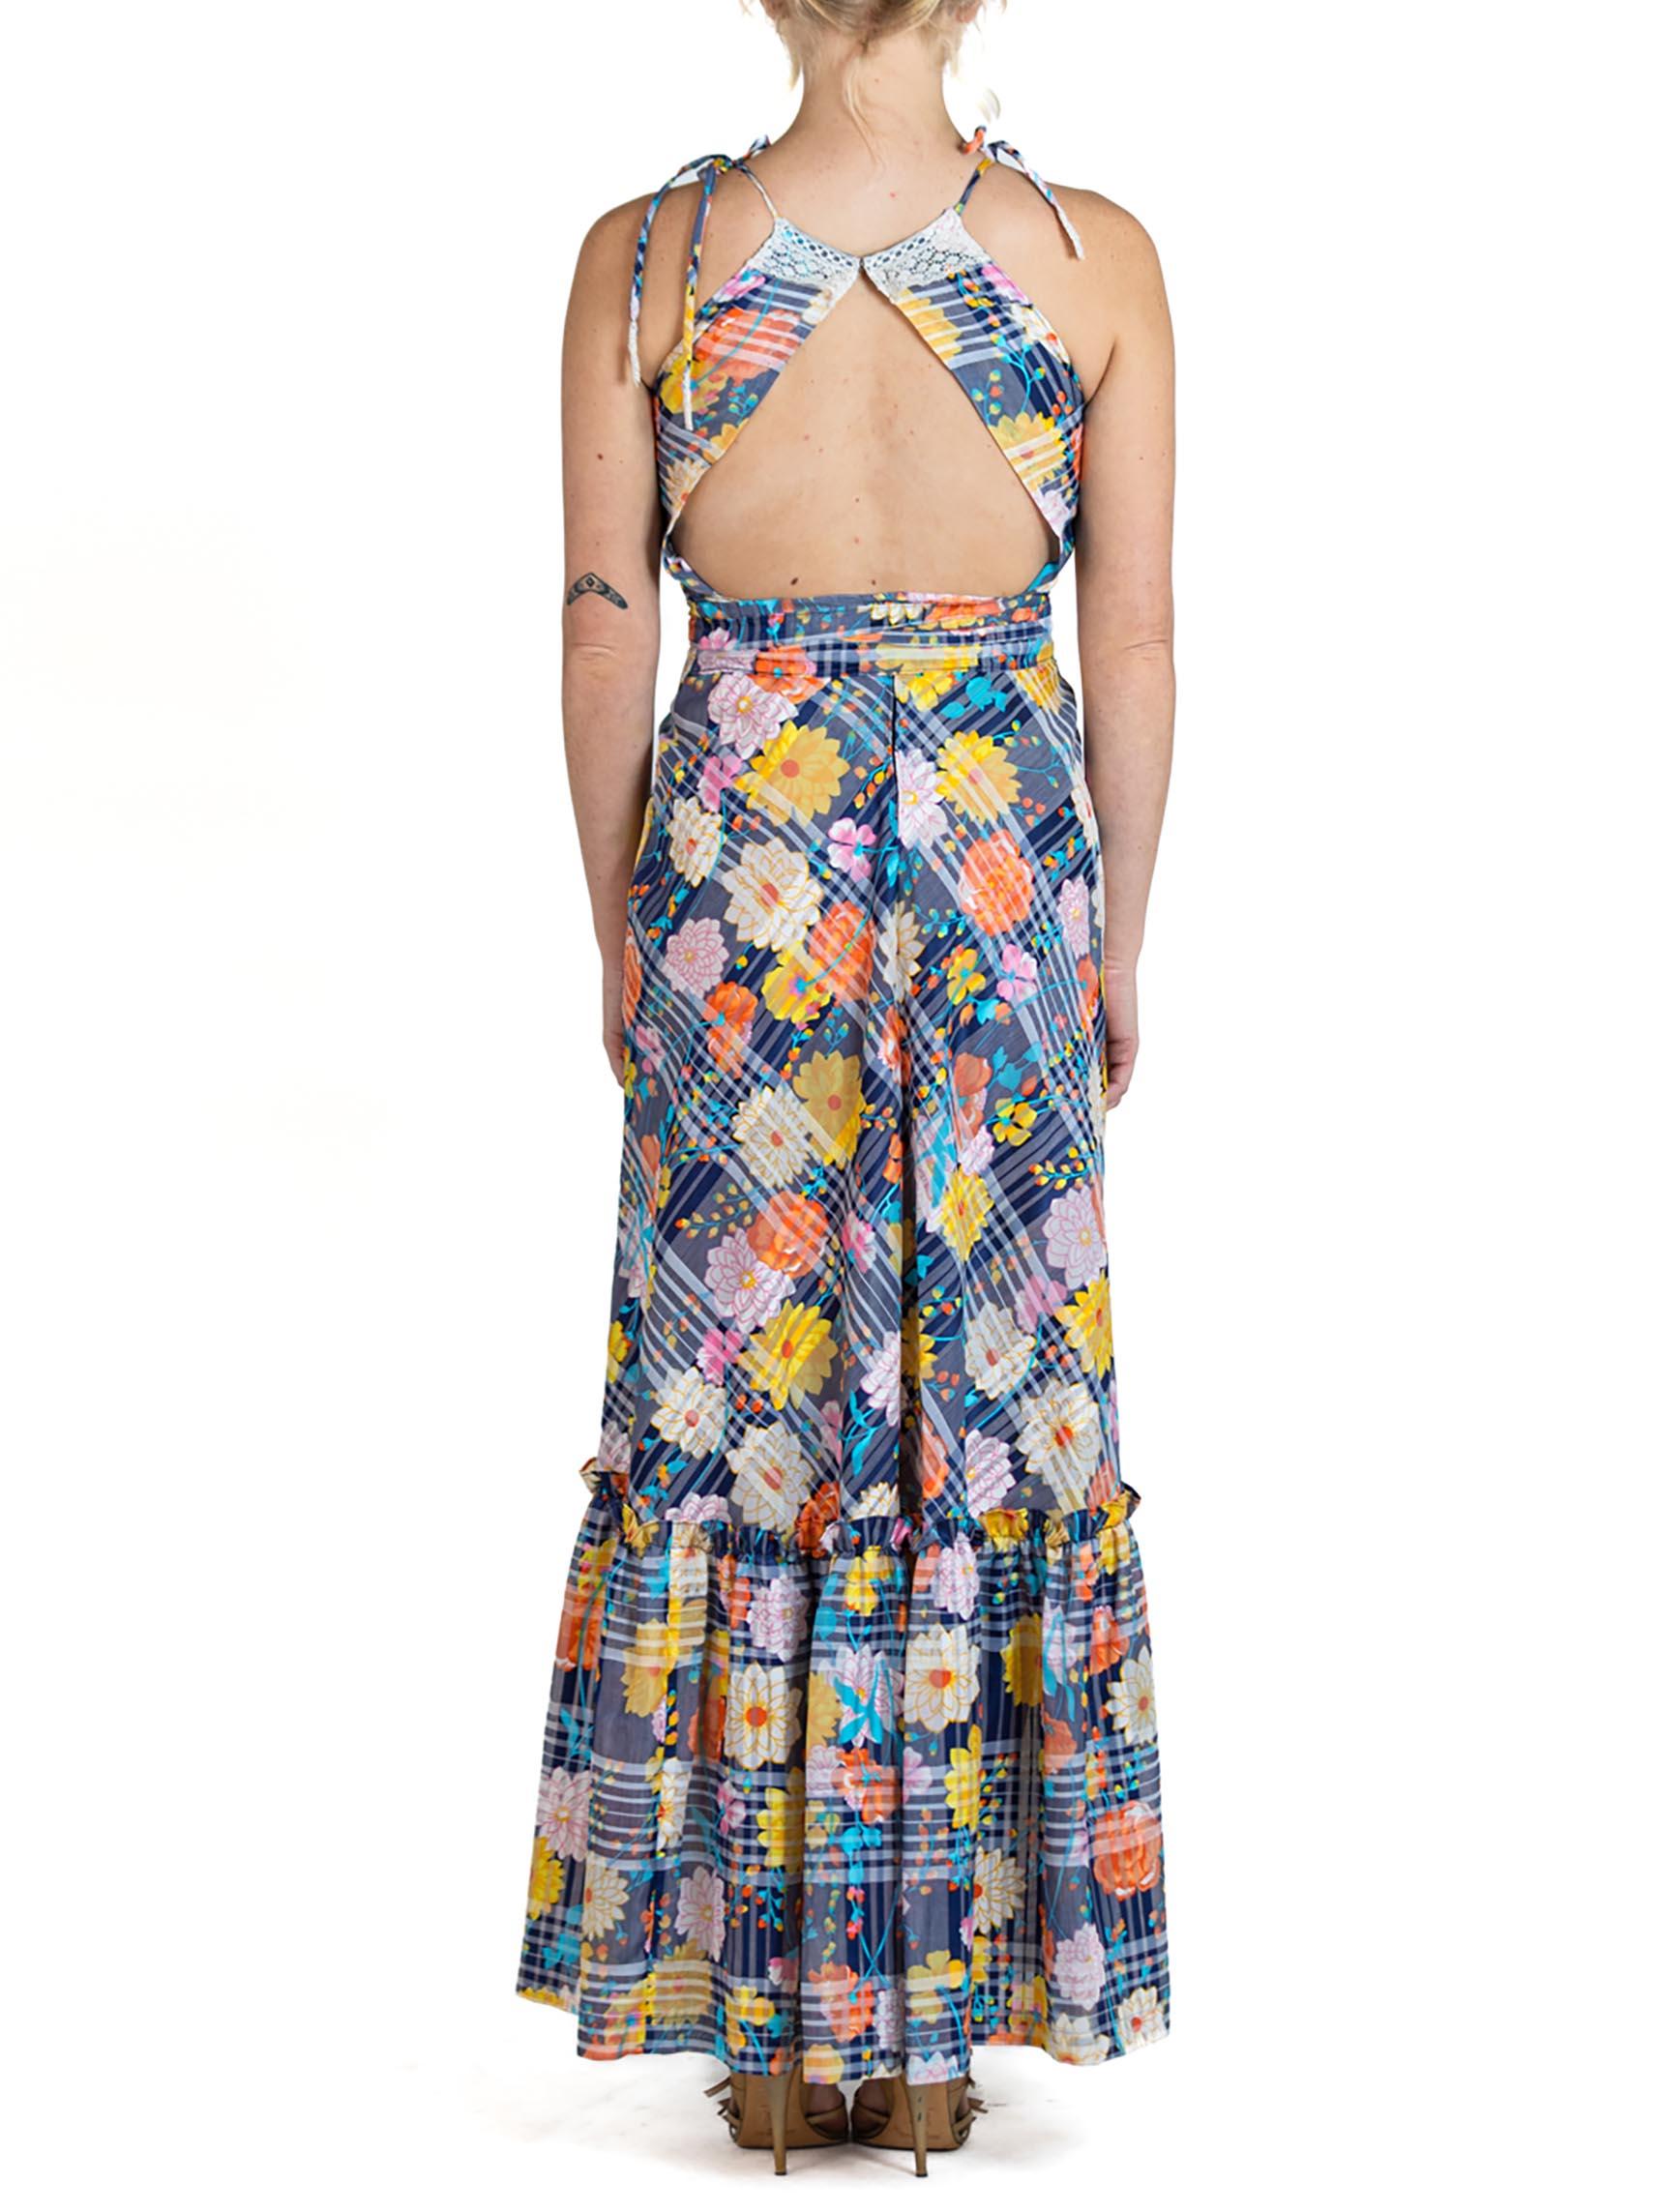 MORPHEW ATELIER Multicolor Blue Floral Backless Cut-Out Summer Dress For Sale 2